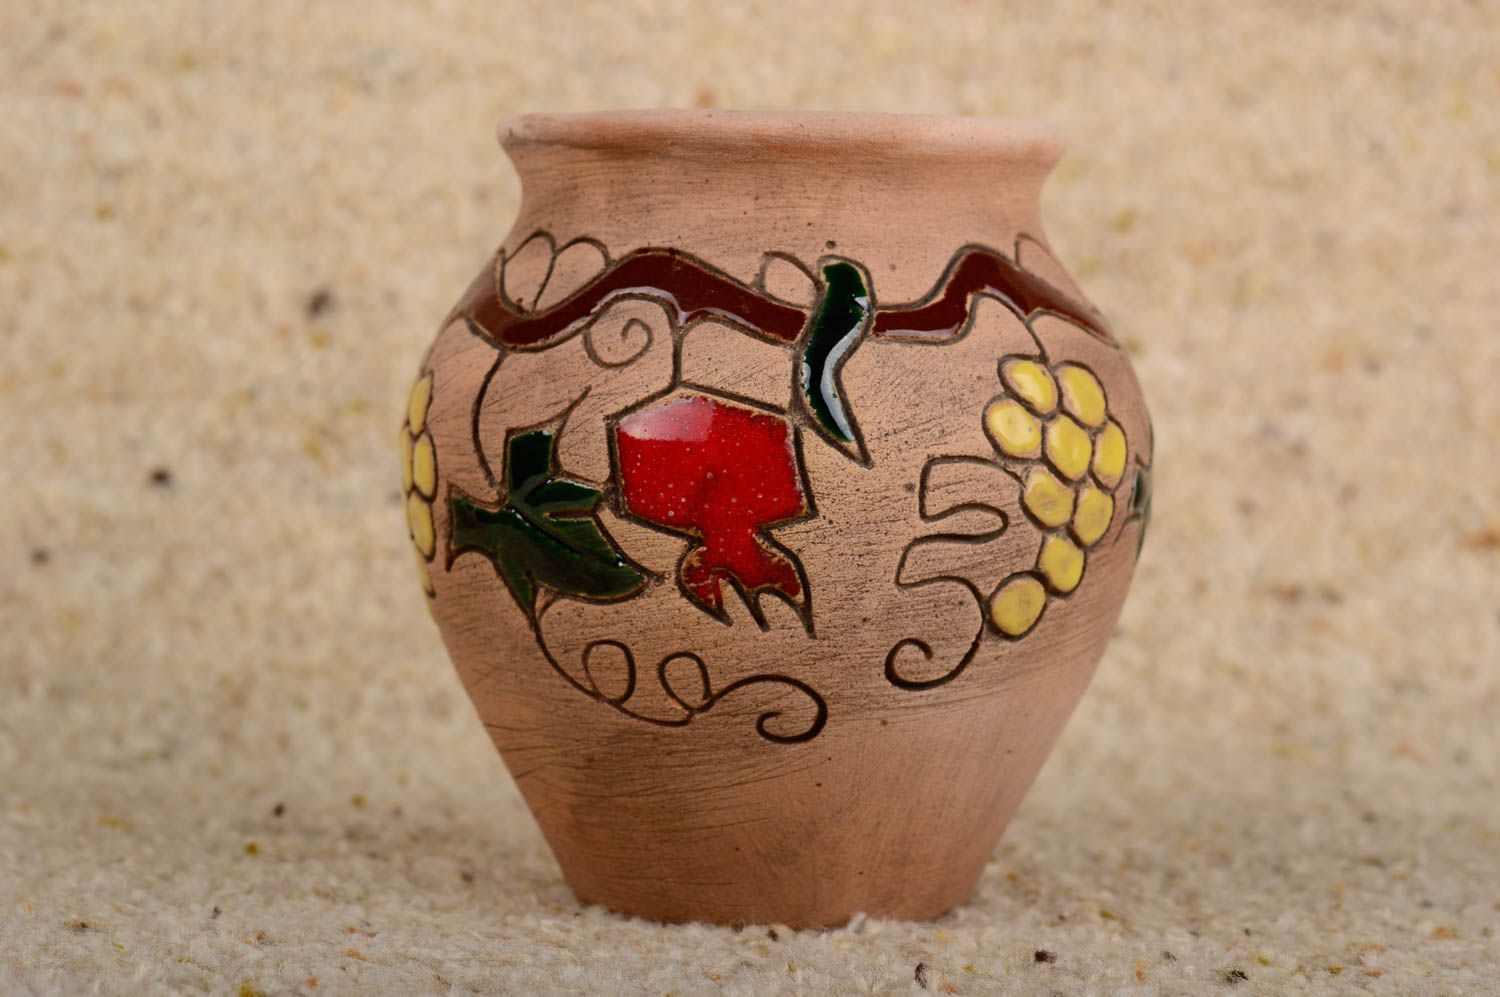 10 oz ceramic wine pitcher pot with handmade ornament 0,35 lb photo 1